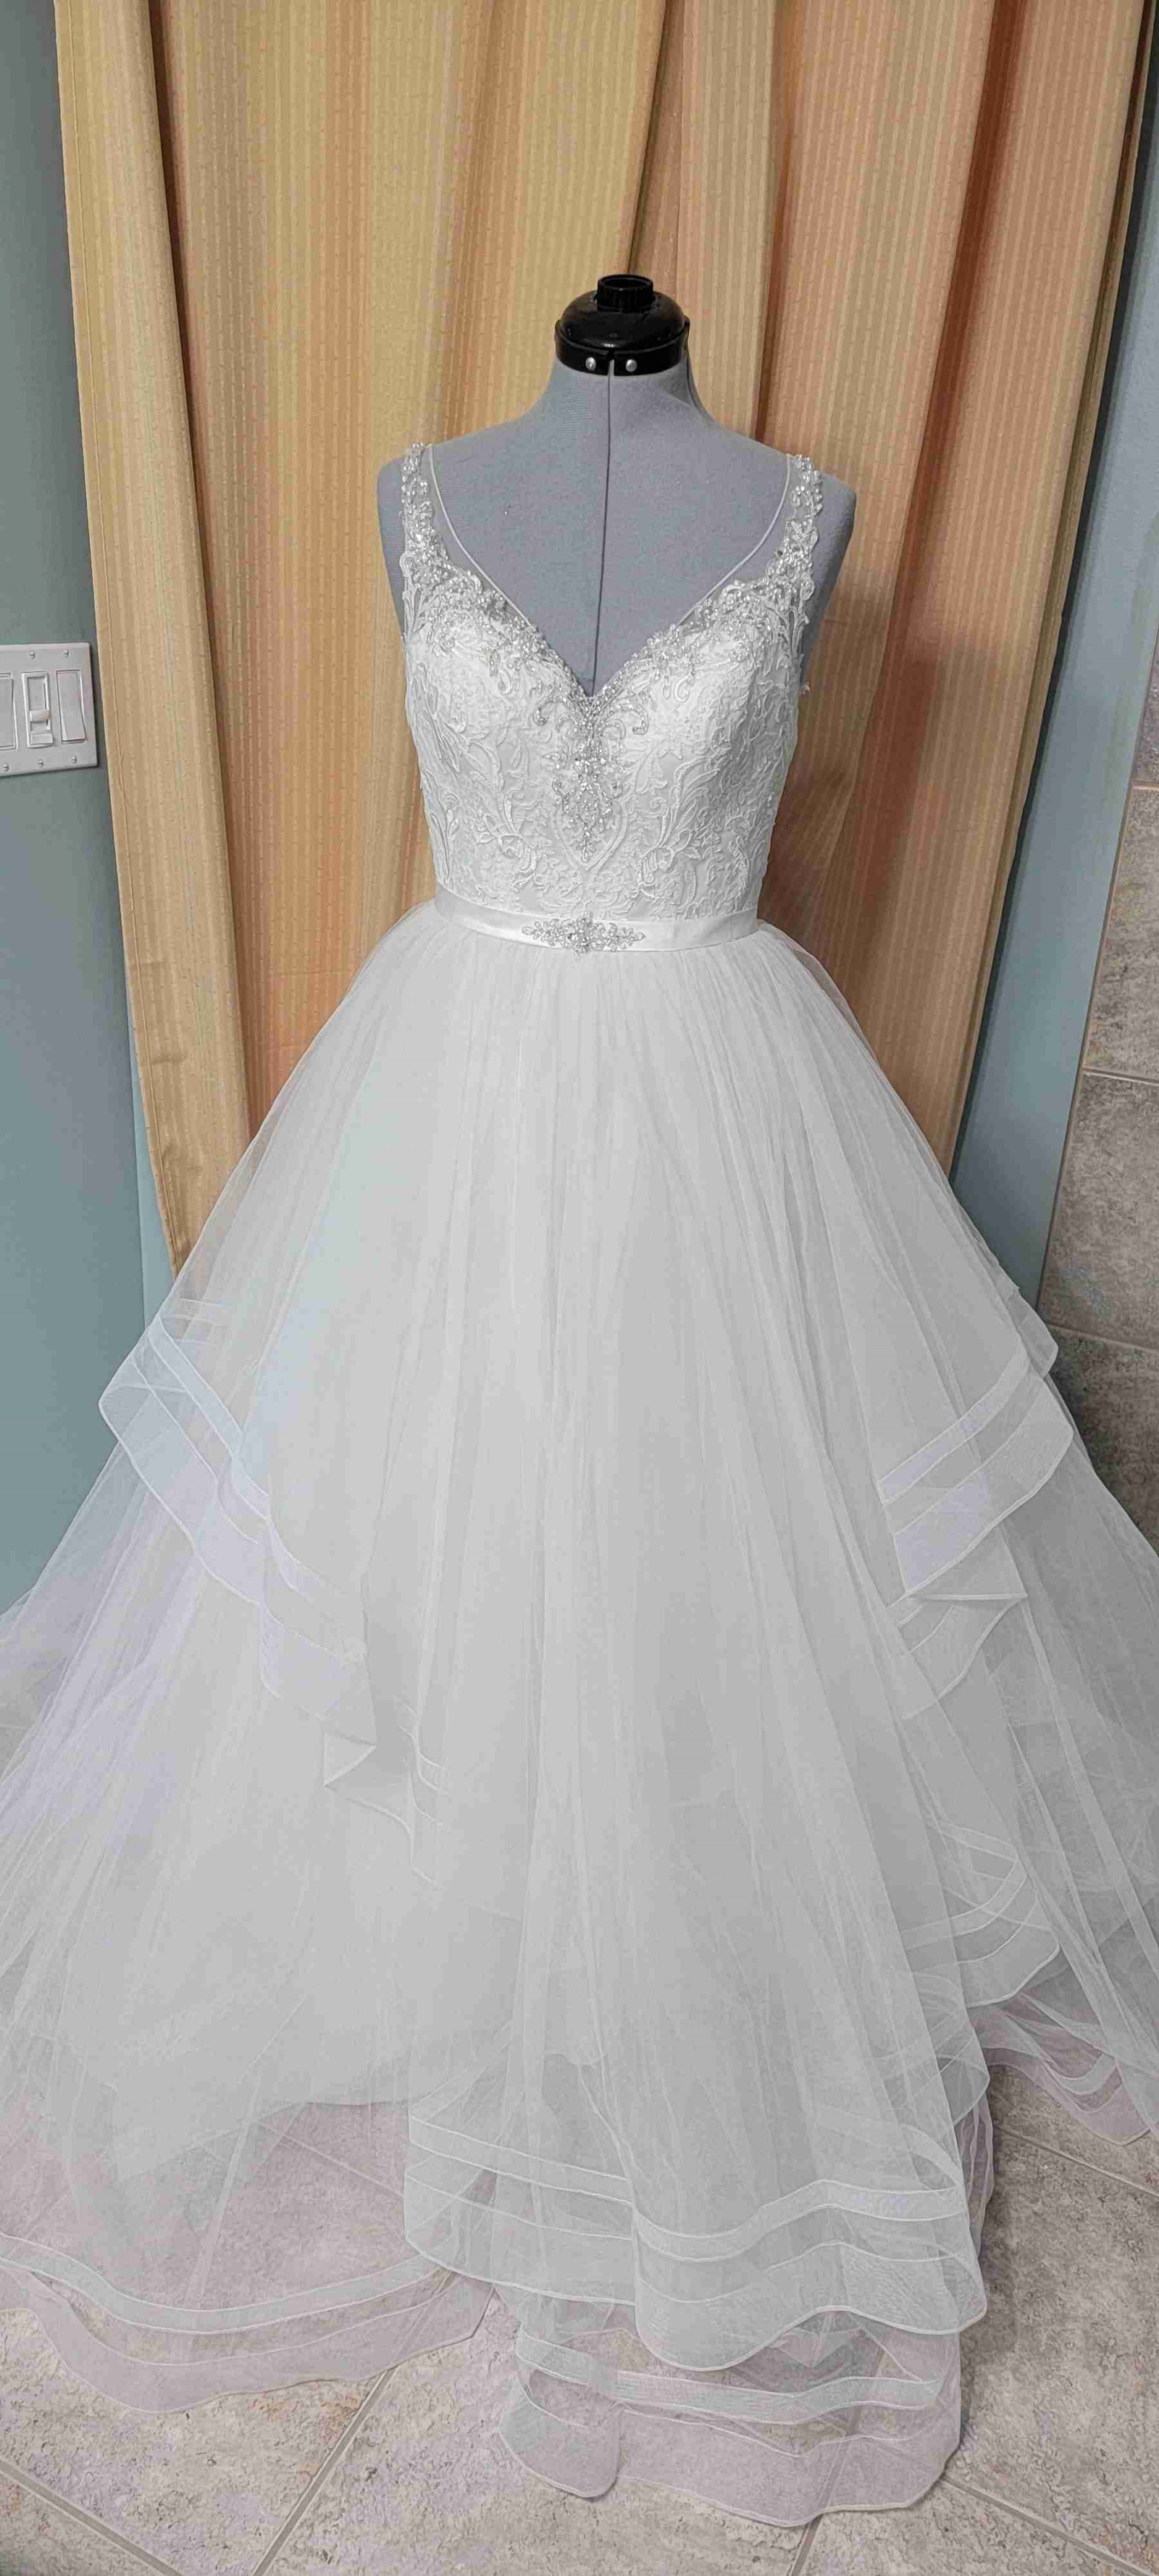 Lucent Bridal Sample Wedding Dress Save 63% - Stillwhite